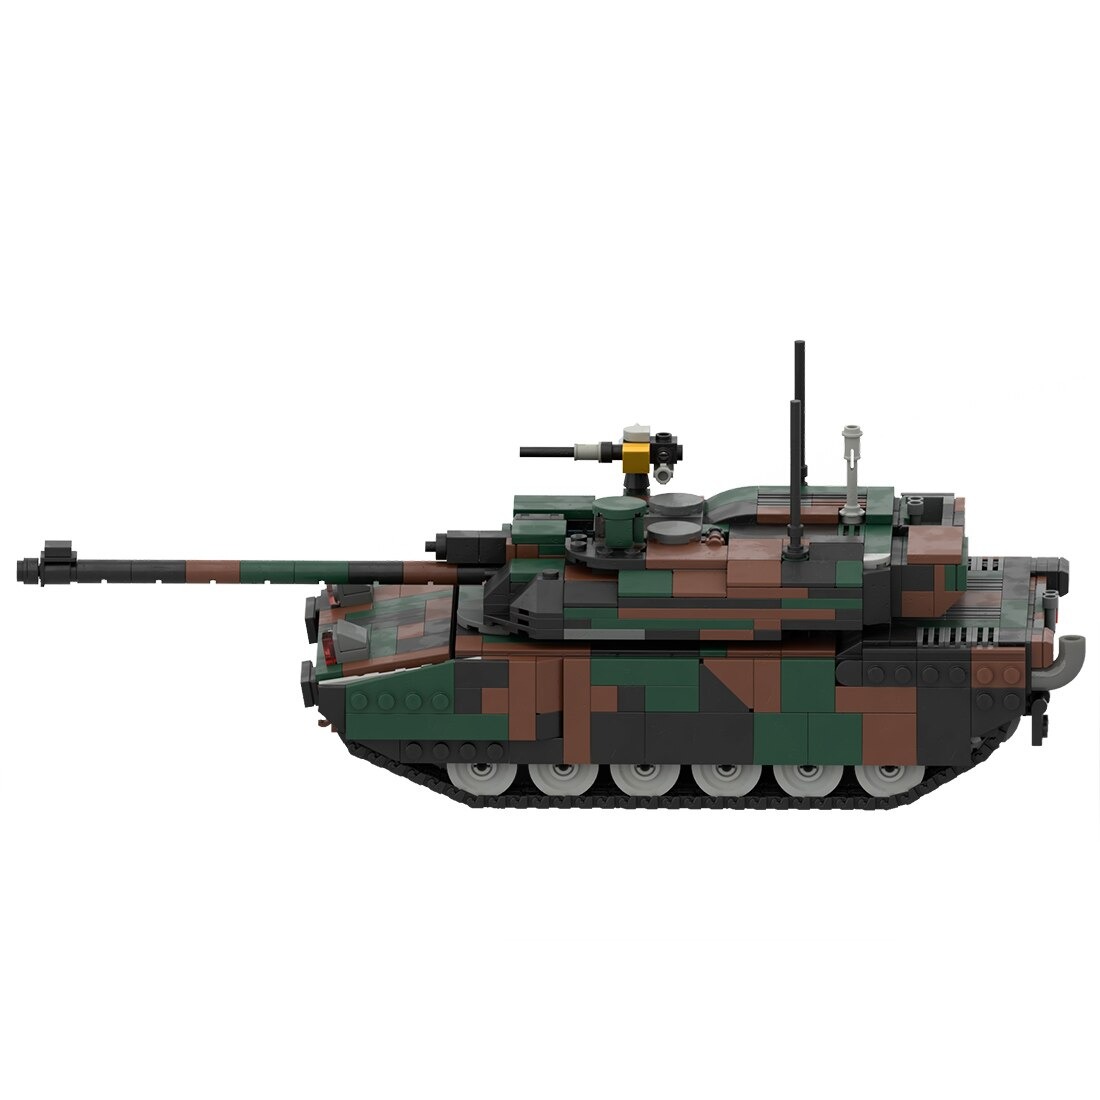 moc 34858 leclerc main battle tank model main 3 - MOULD KING